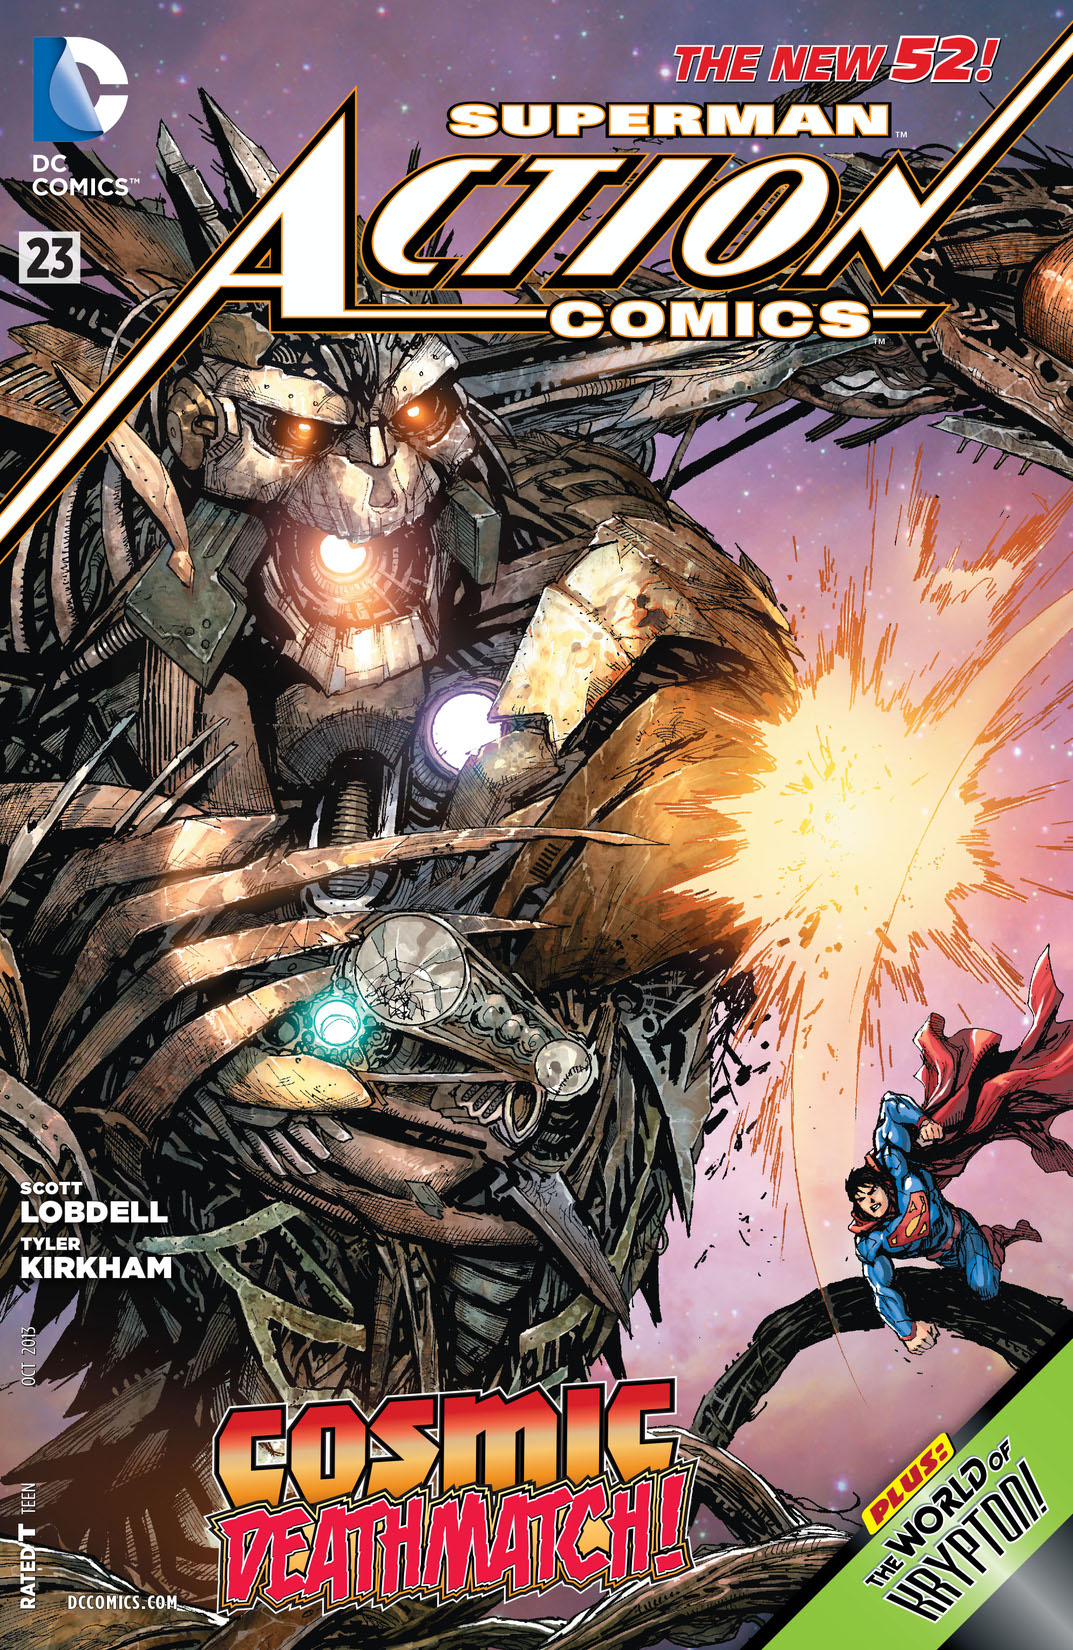 Action Comics (2011-) #23 preview images